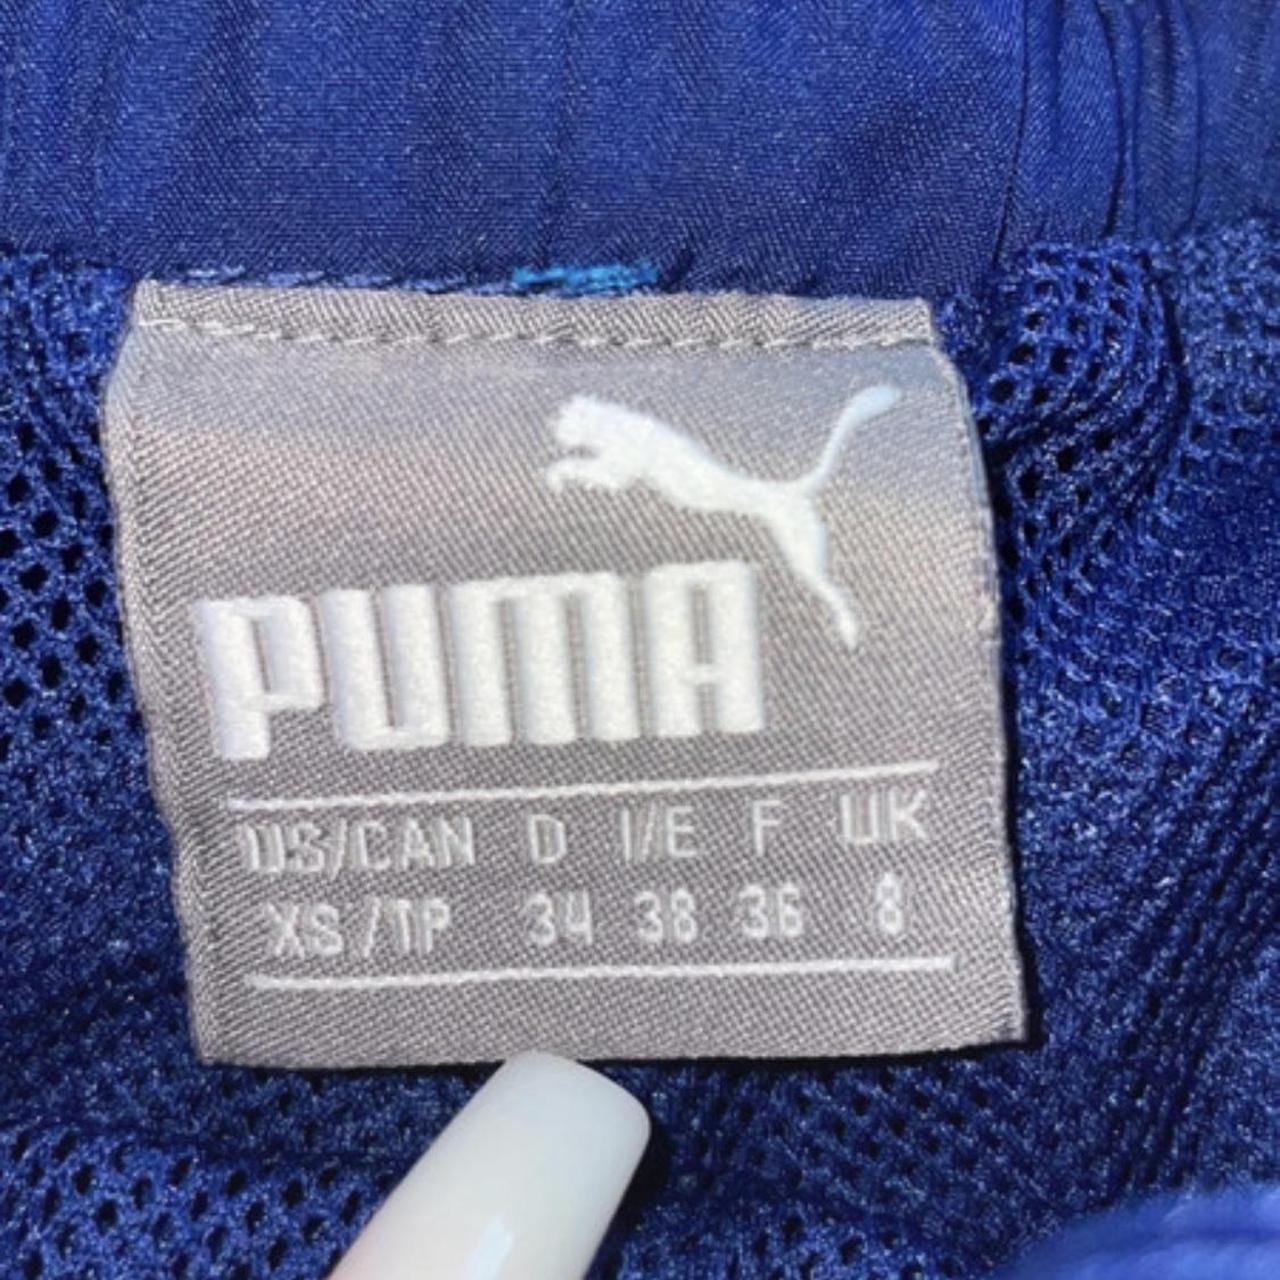 Royal blue puma shorts, mesh lining, short shorts - Depop